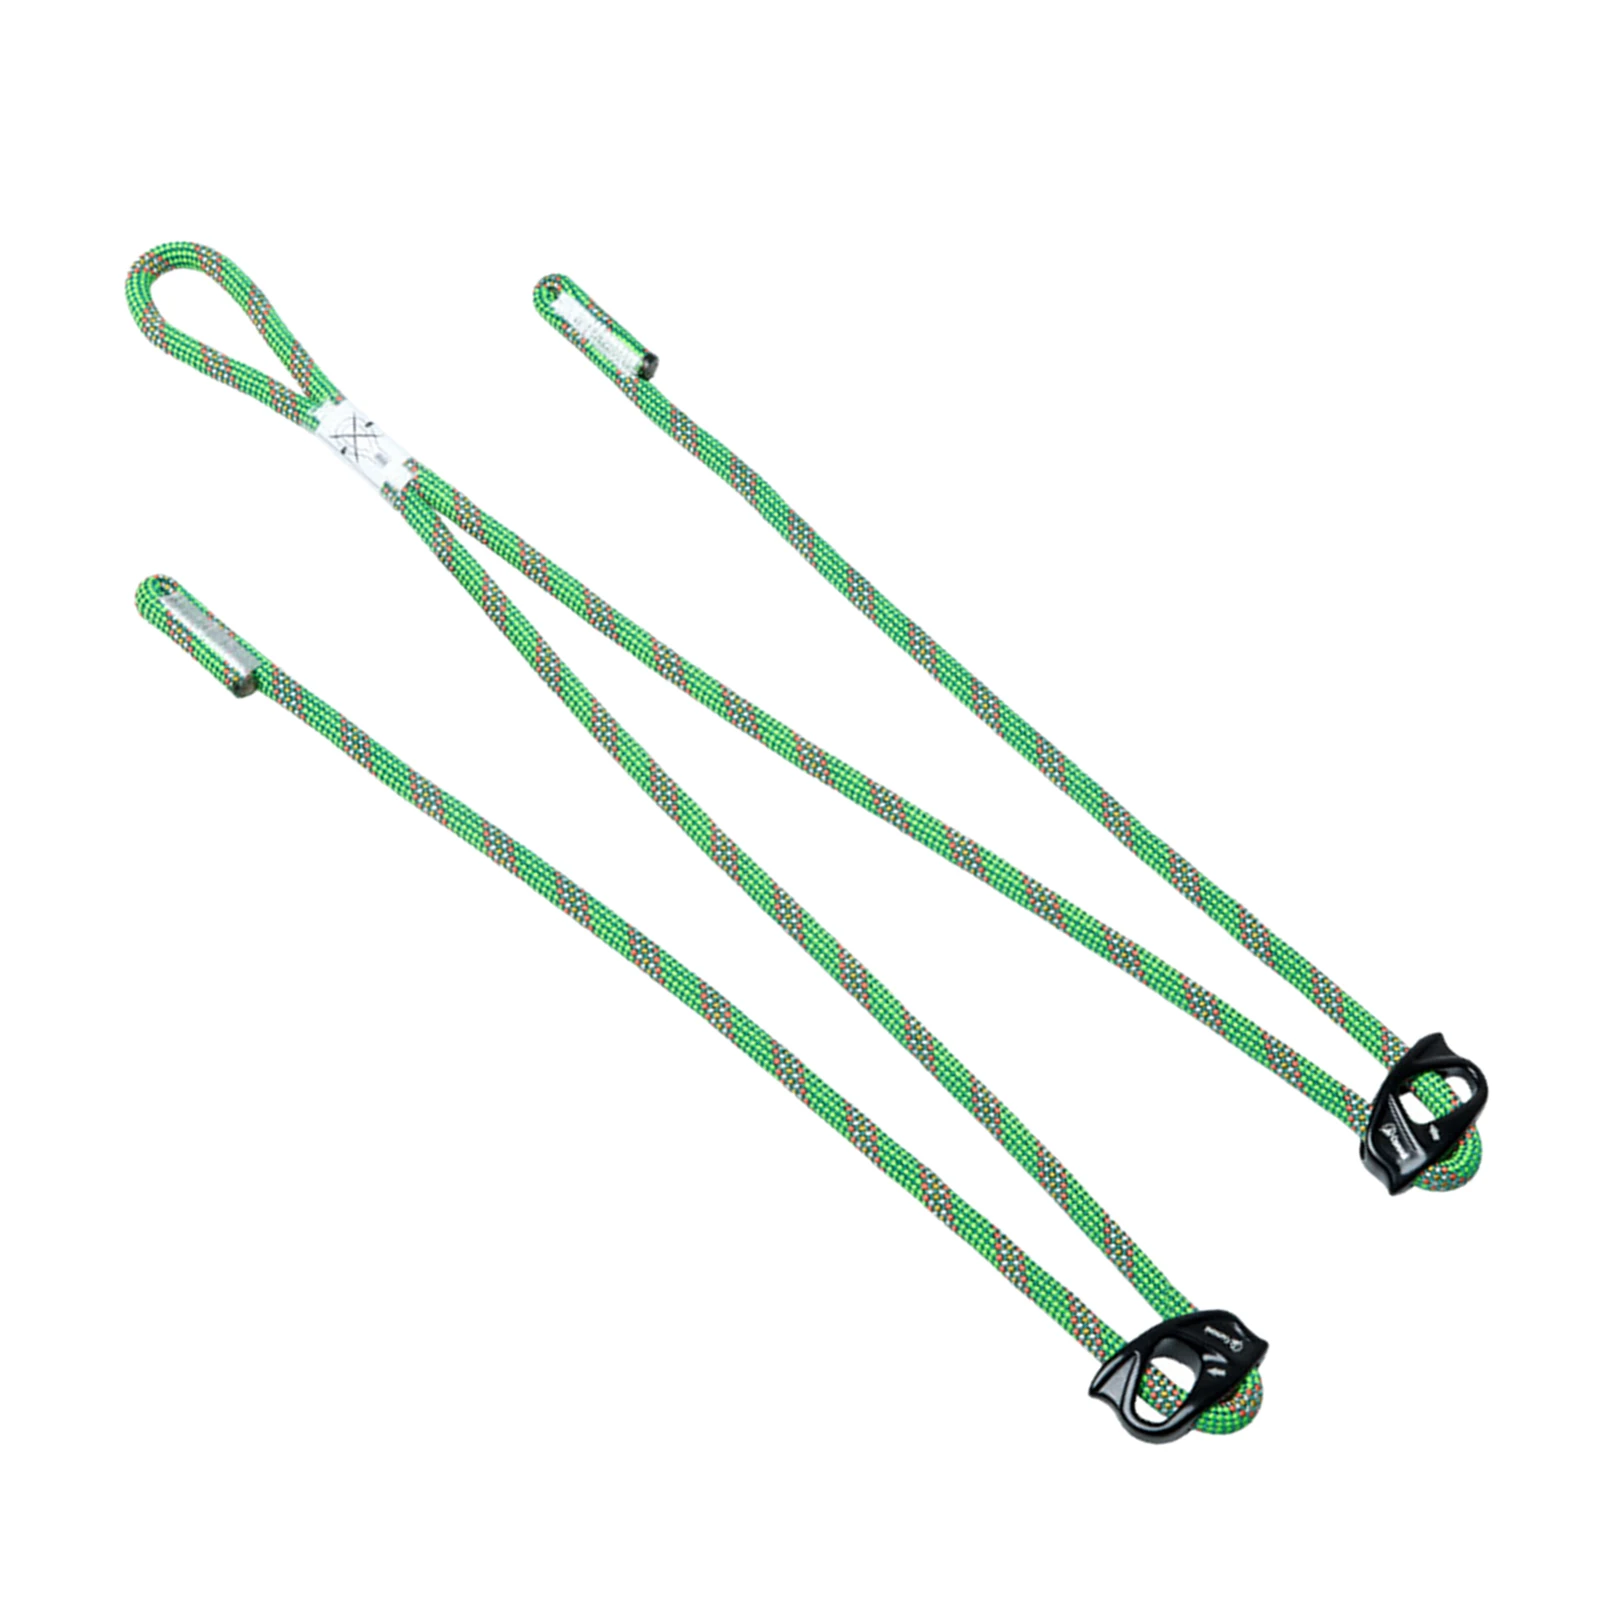 Climbing Positioning Lanyard Harness Rope Cut Resistant Aloft Work Equipment